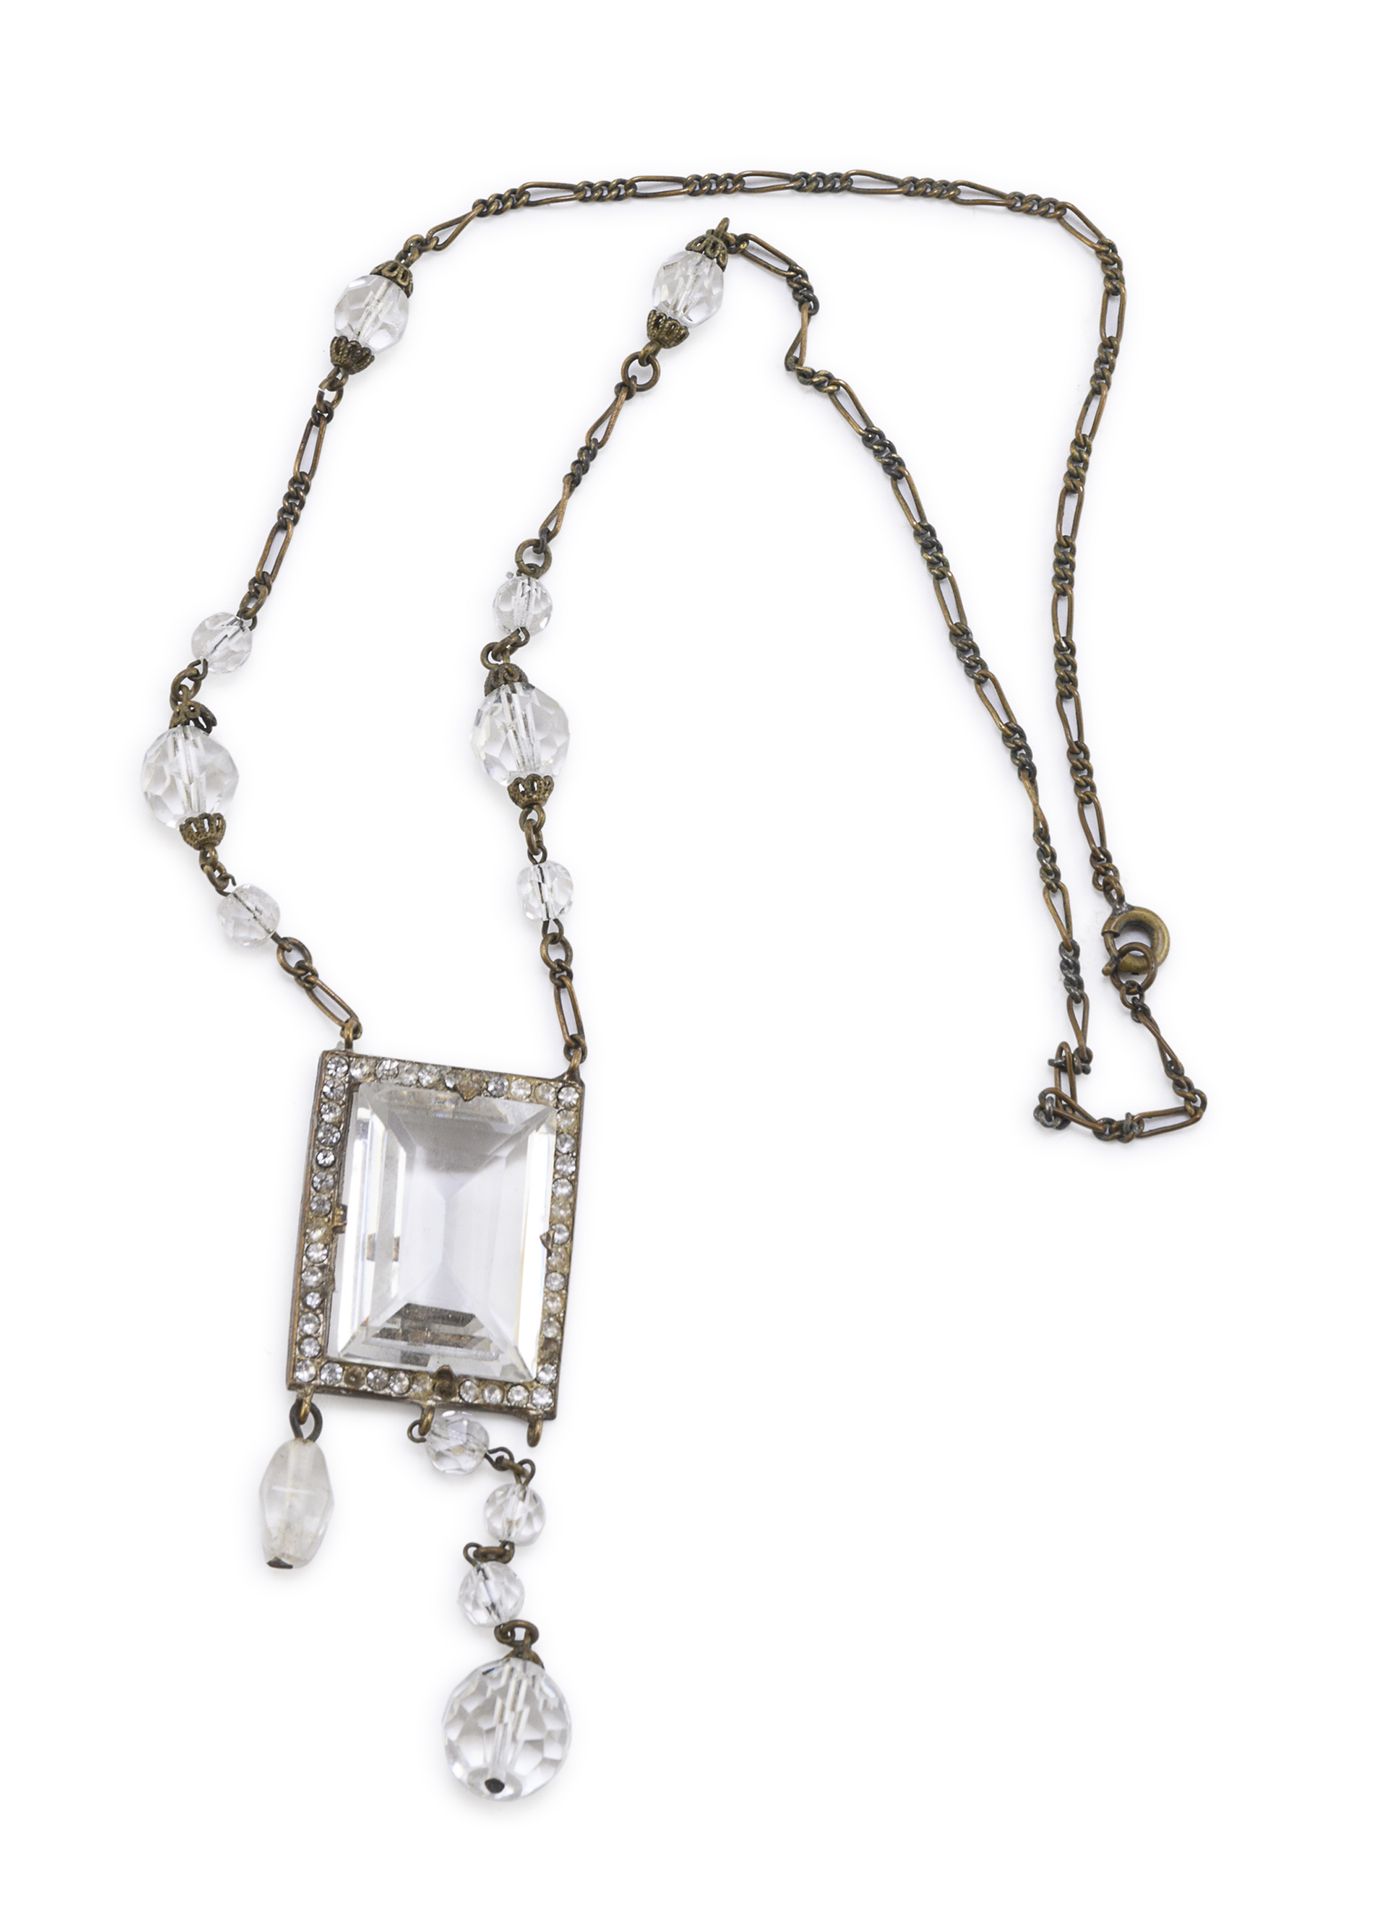 Null 项链，捷克斯洛伐克 1930年代


镀金金属链，带水晶吊坠和水钻框架。


项链长44厘米，吊坠大小为3 x 2.5厘米。


缺少一个水晶珠吊坠。